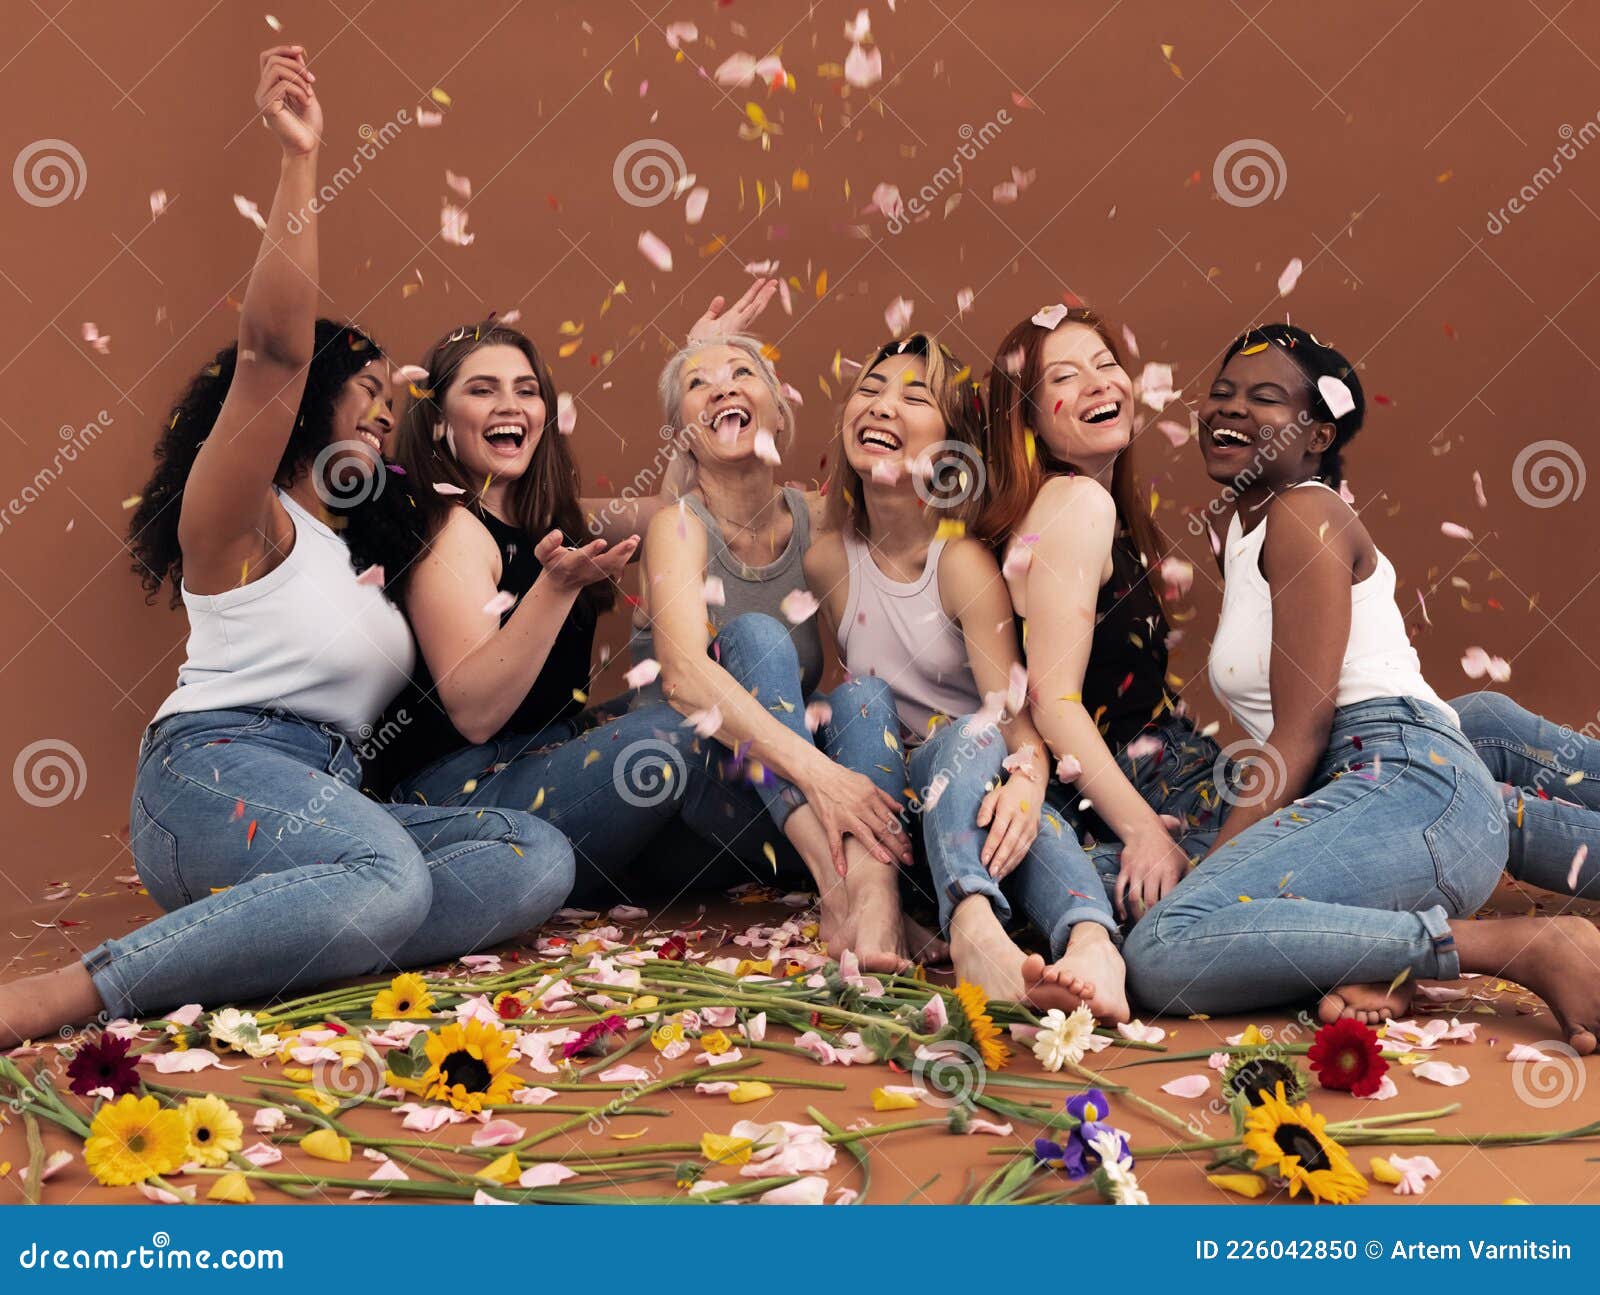 multi ethnic group of happy women sitting under falling petals